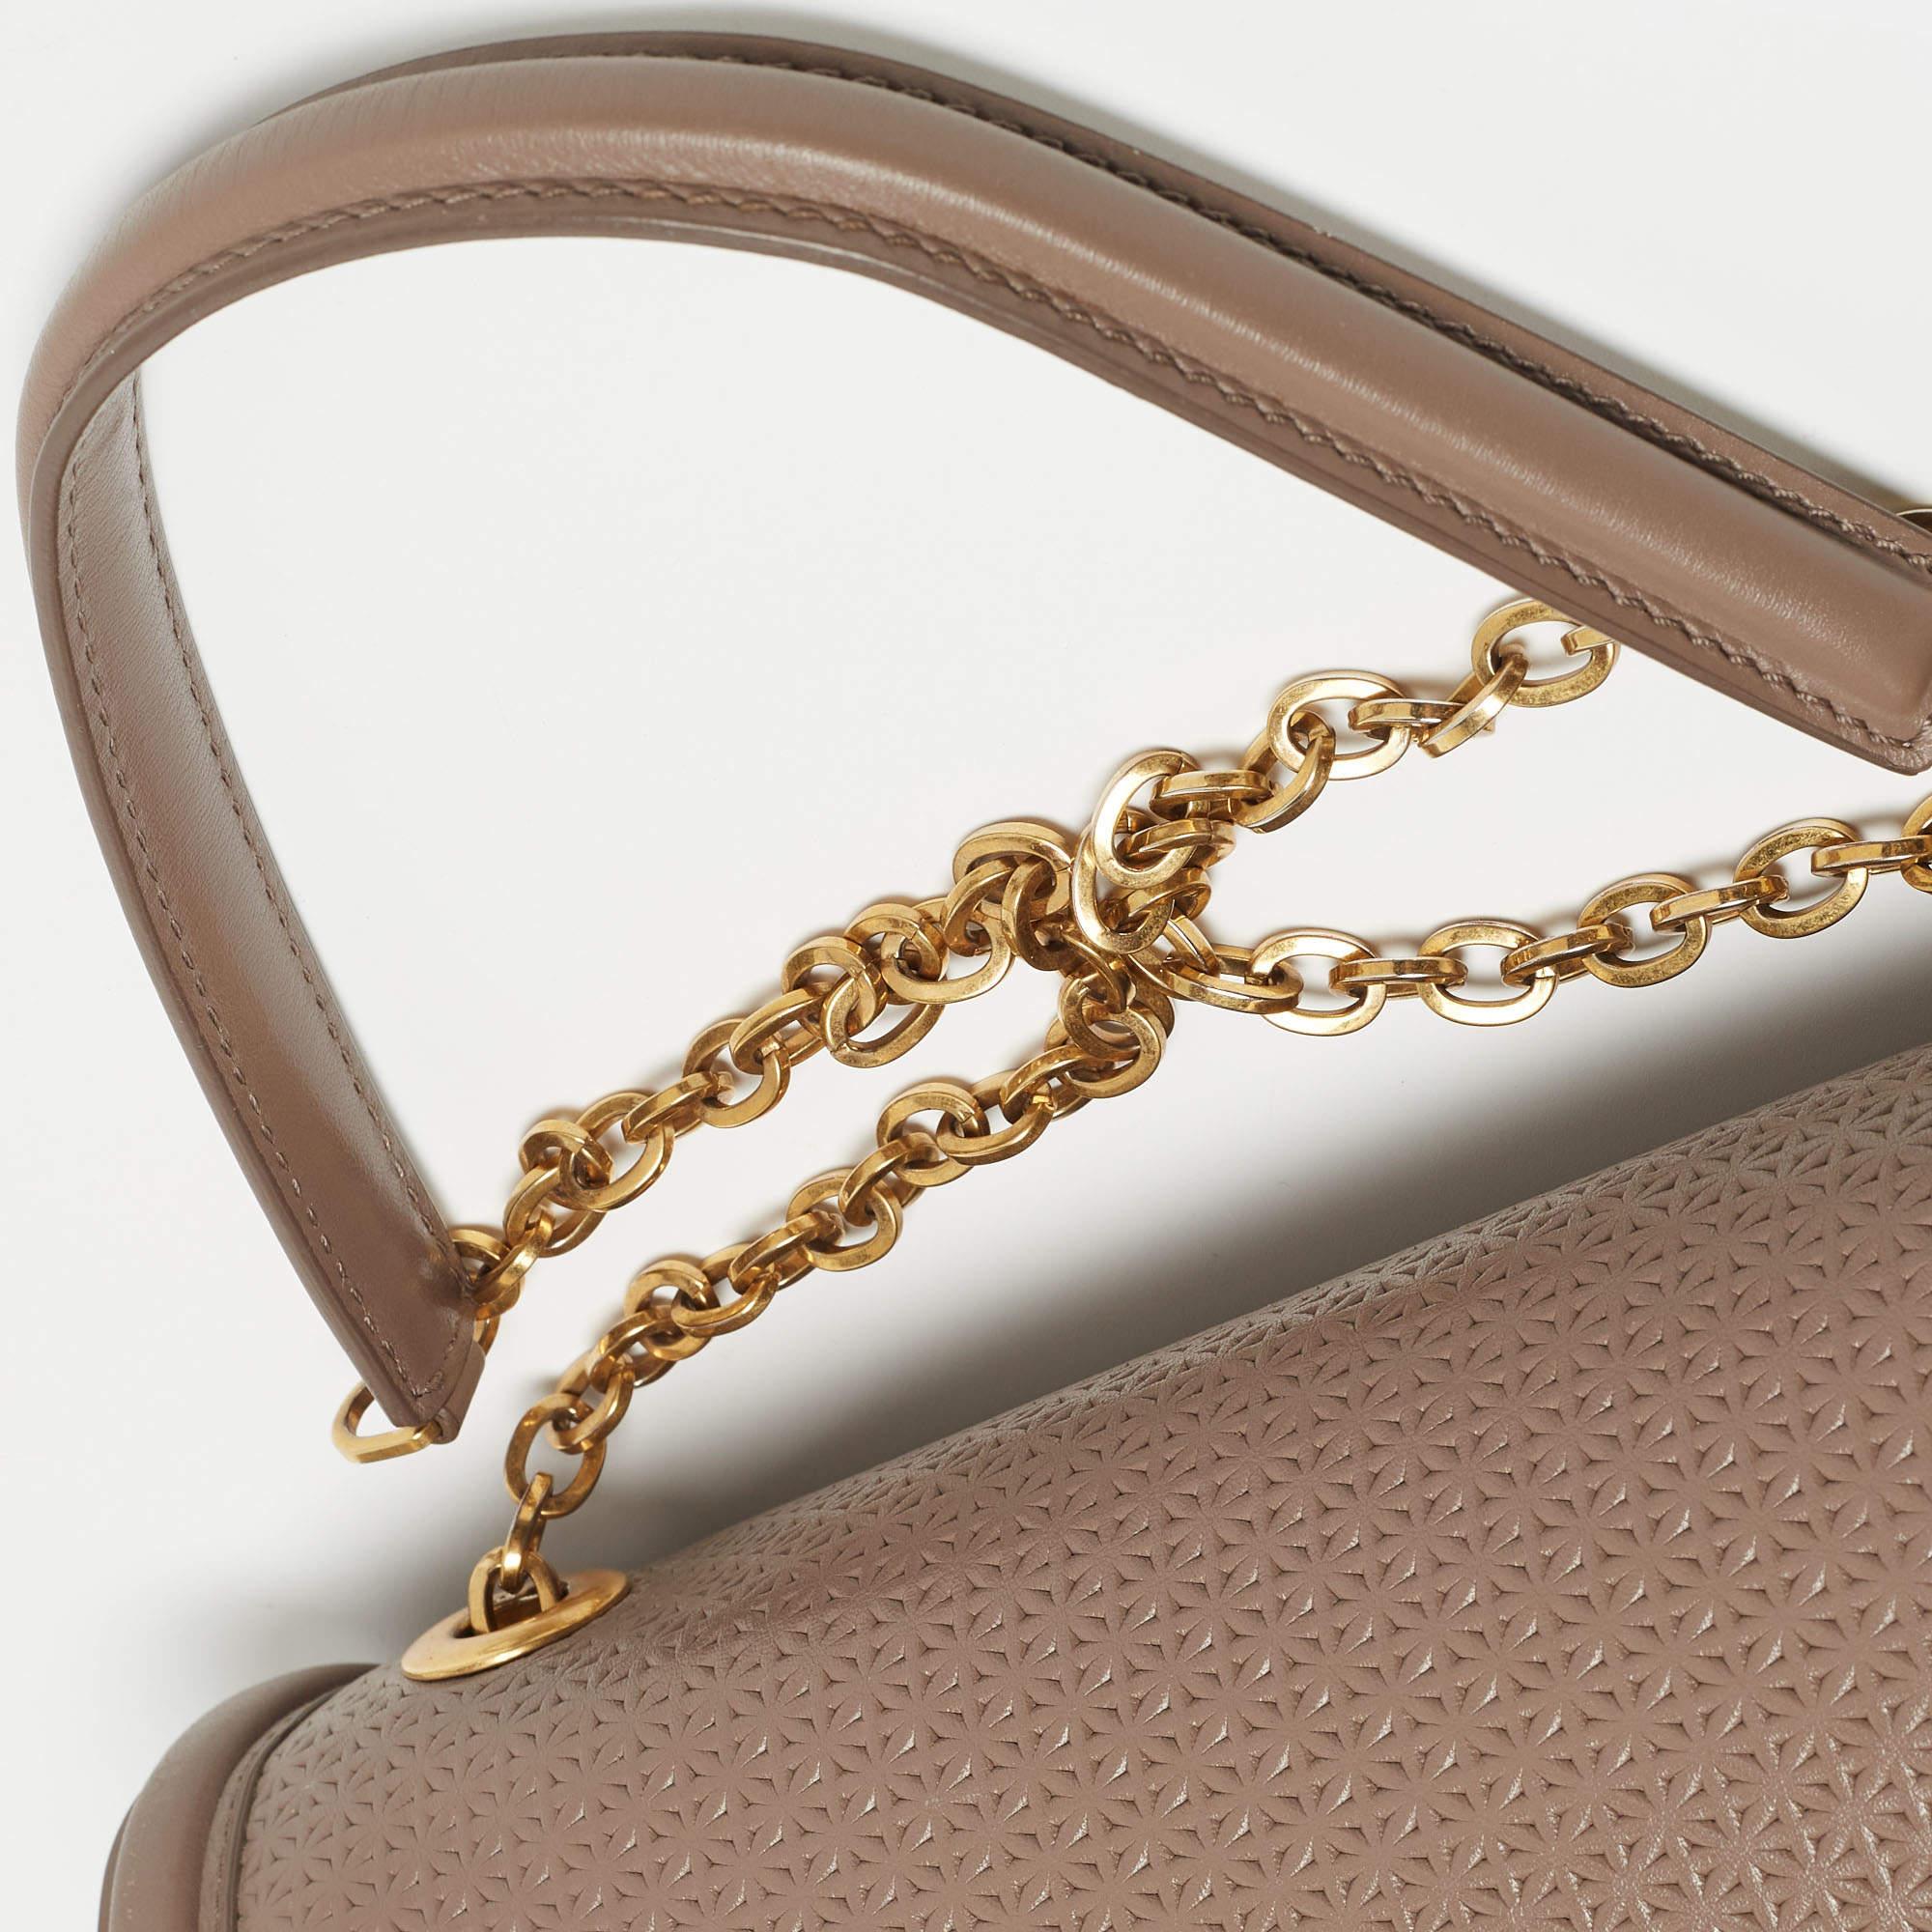 Women's Alexander McQueen Taupe Textured Leather Heroine Chain Shoulder Bag